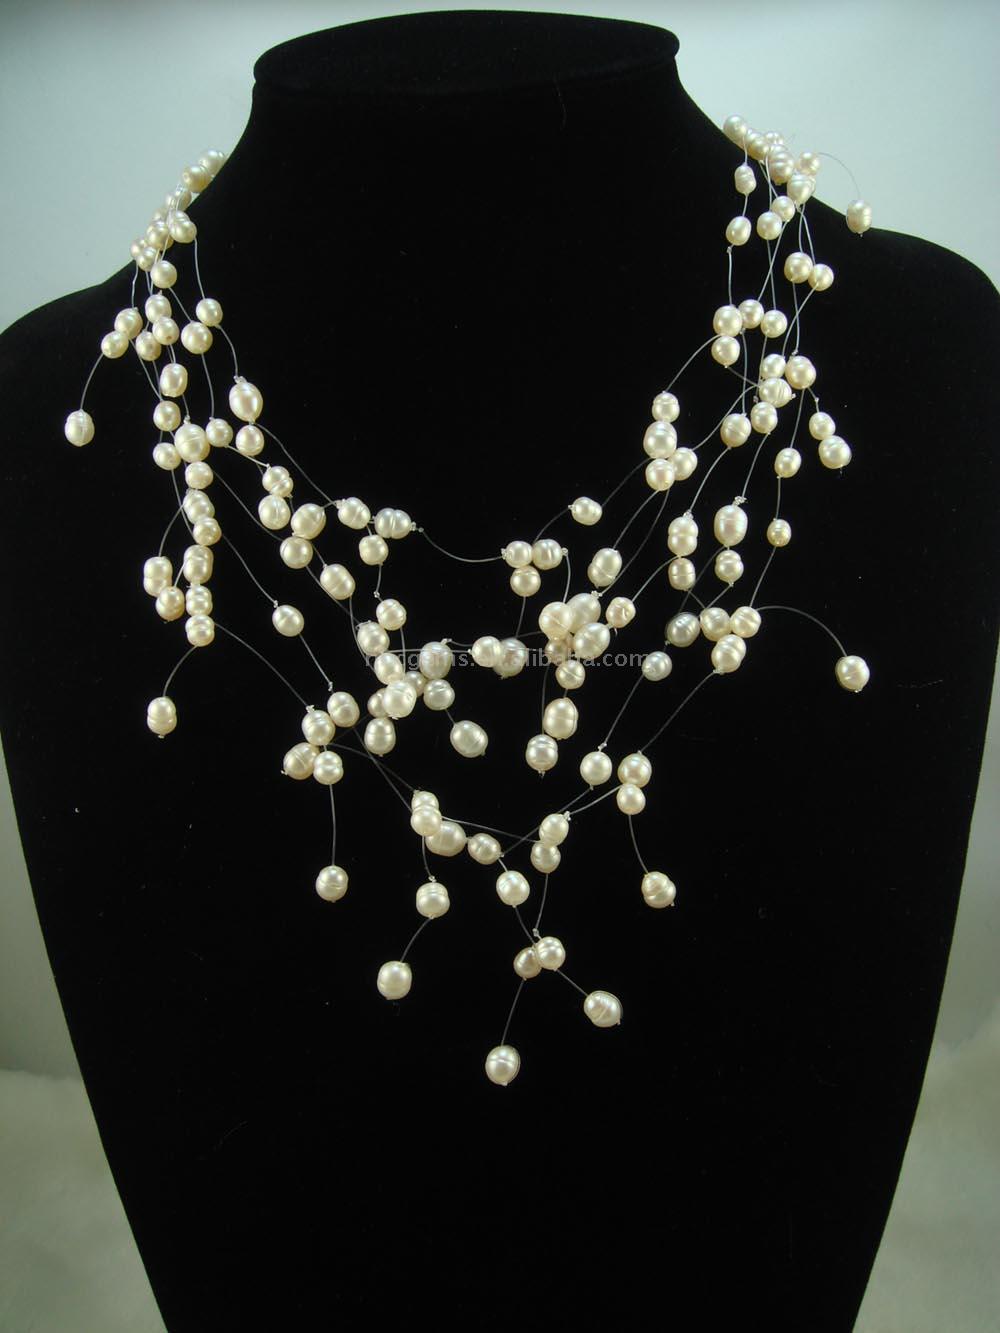  Pearl Necklace 1021 (Ожерелье Pearl 1021)